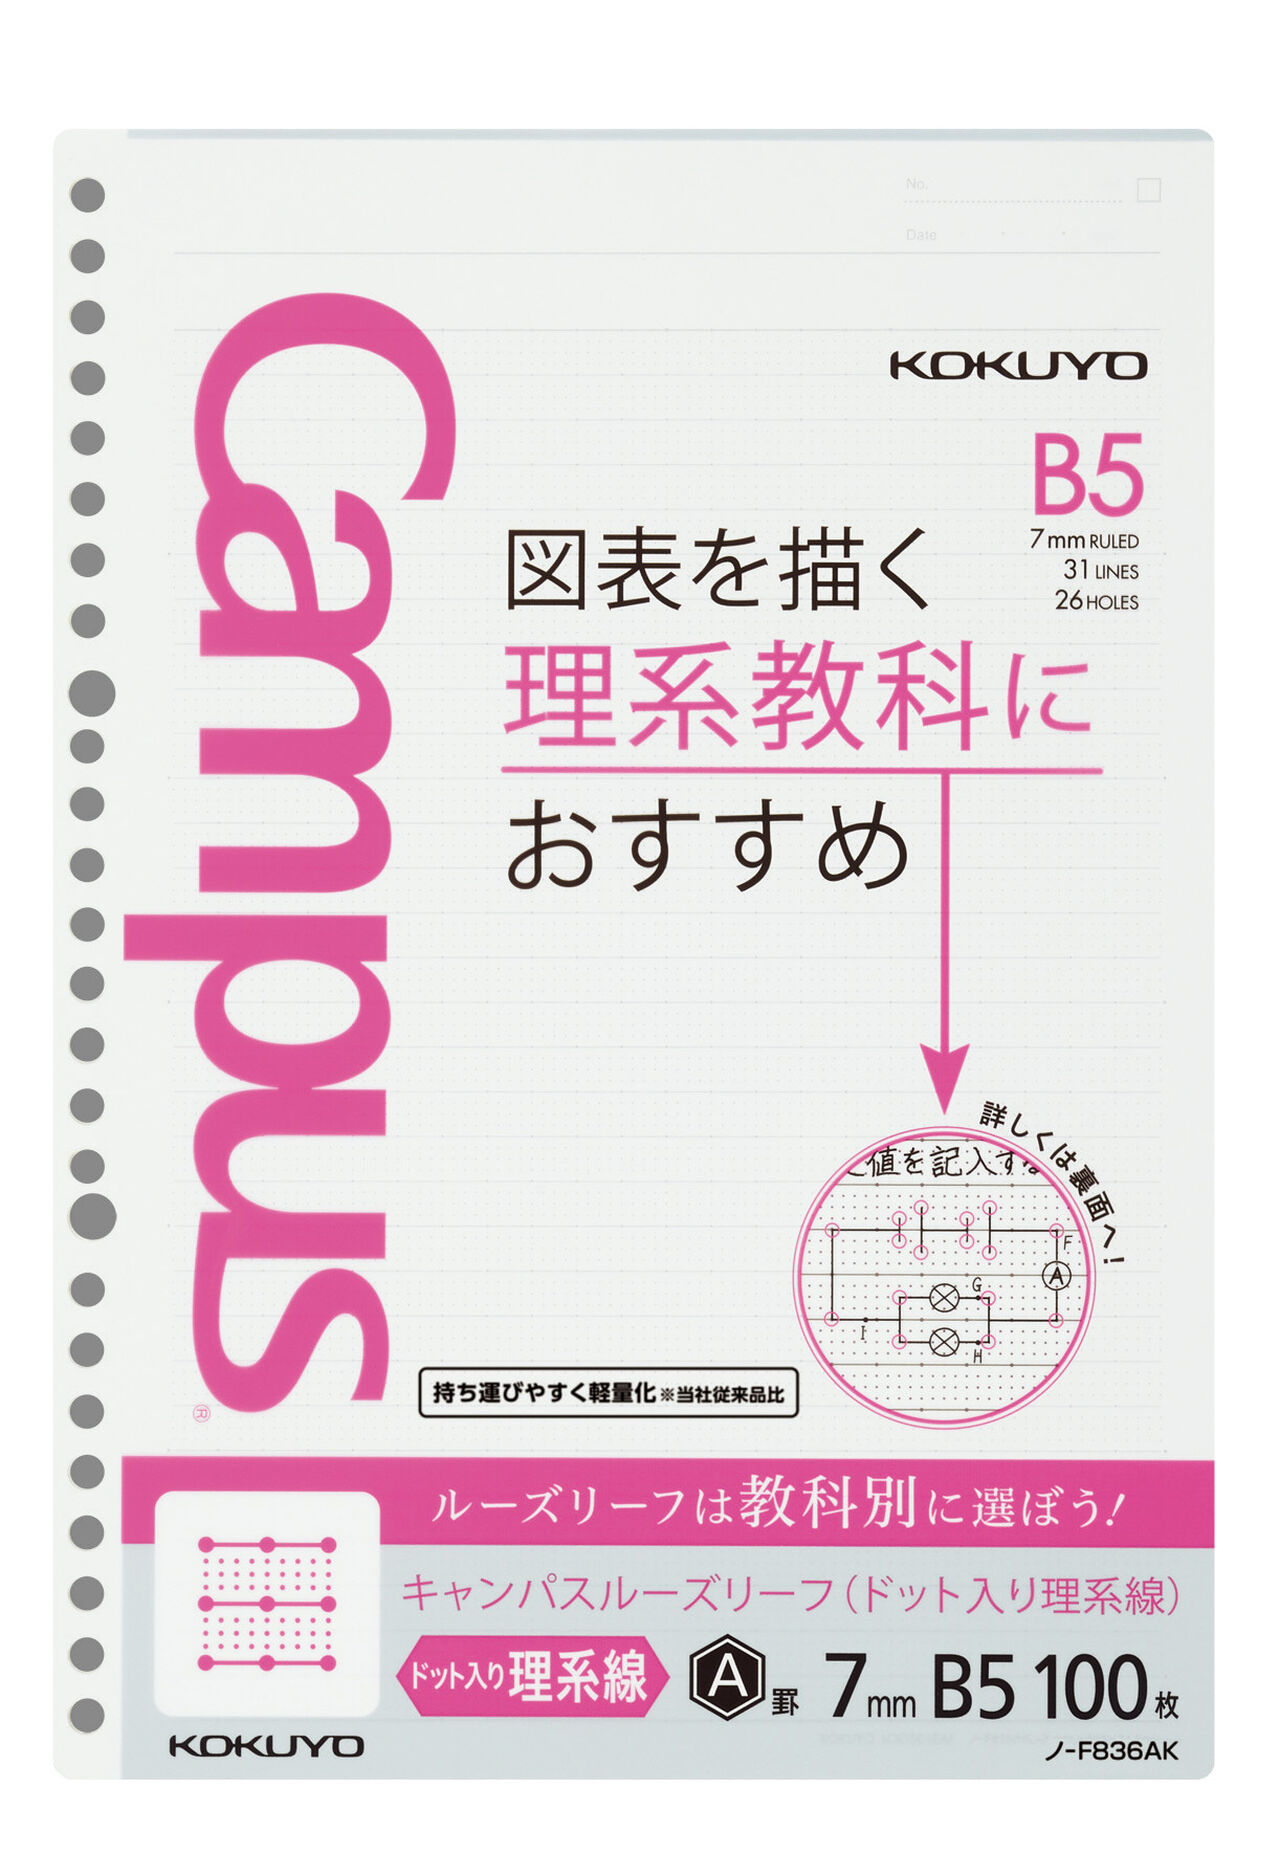 Kokuyo Campus Mo Timeless Handbook Template Rotating Ruler - Circle